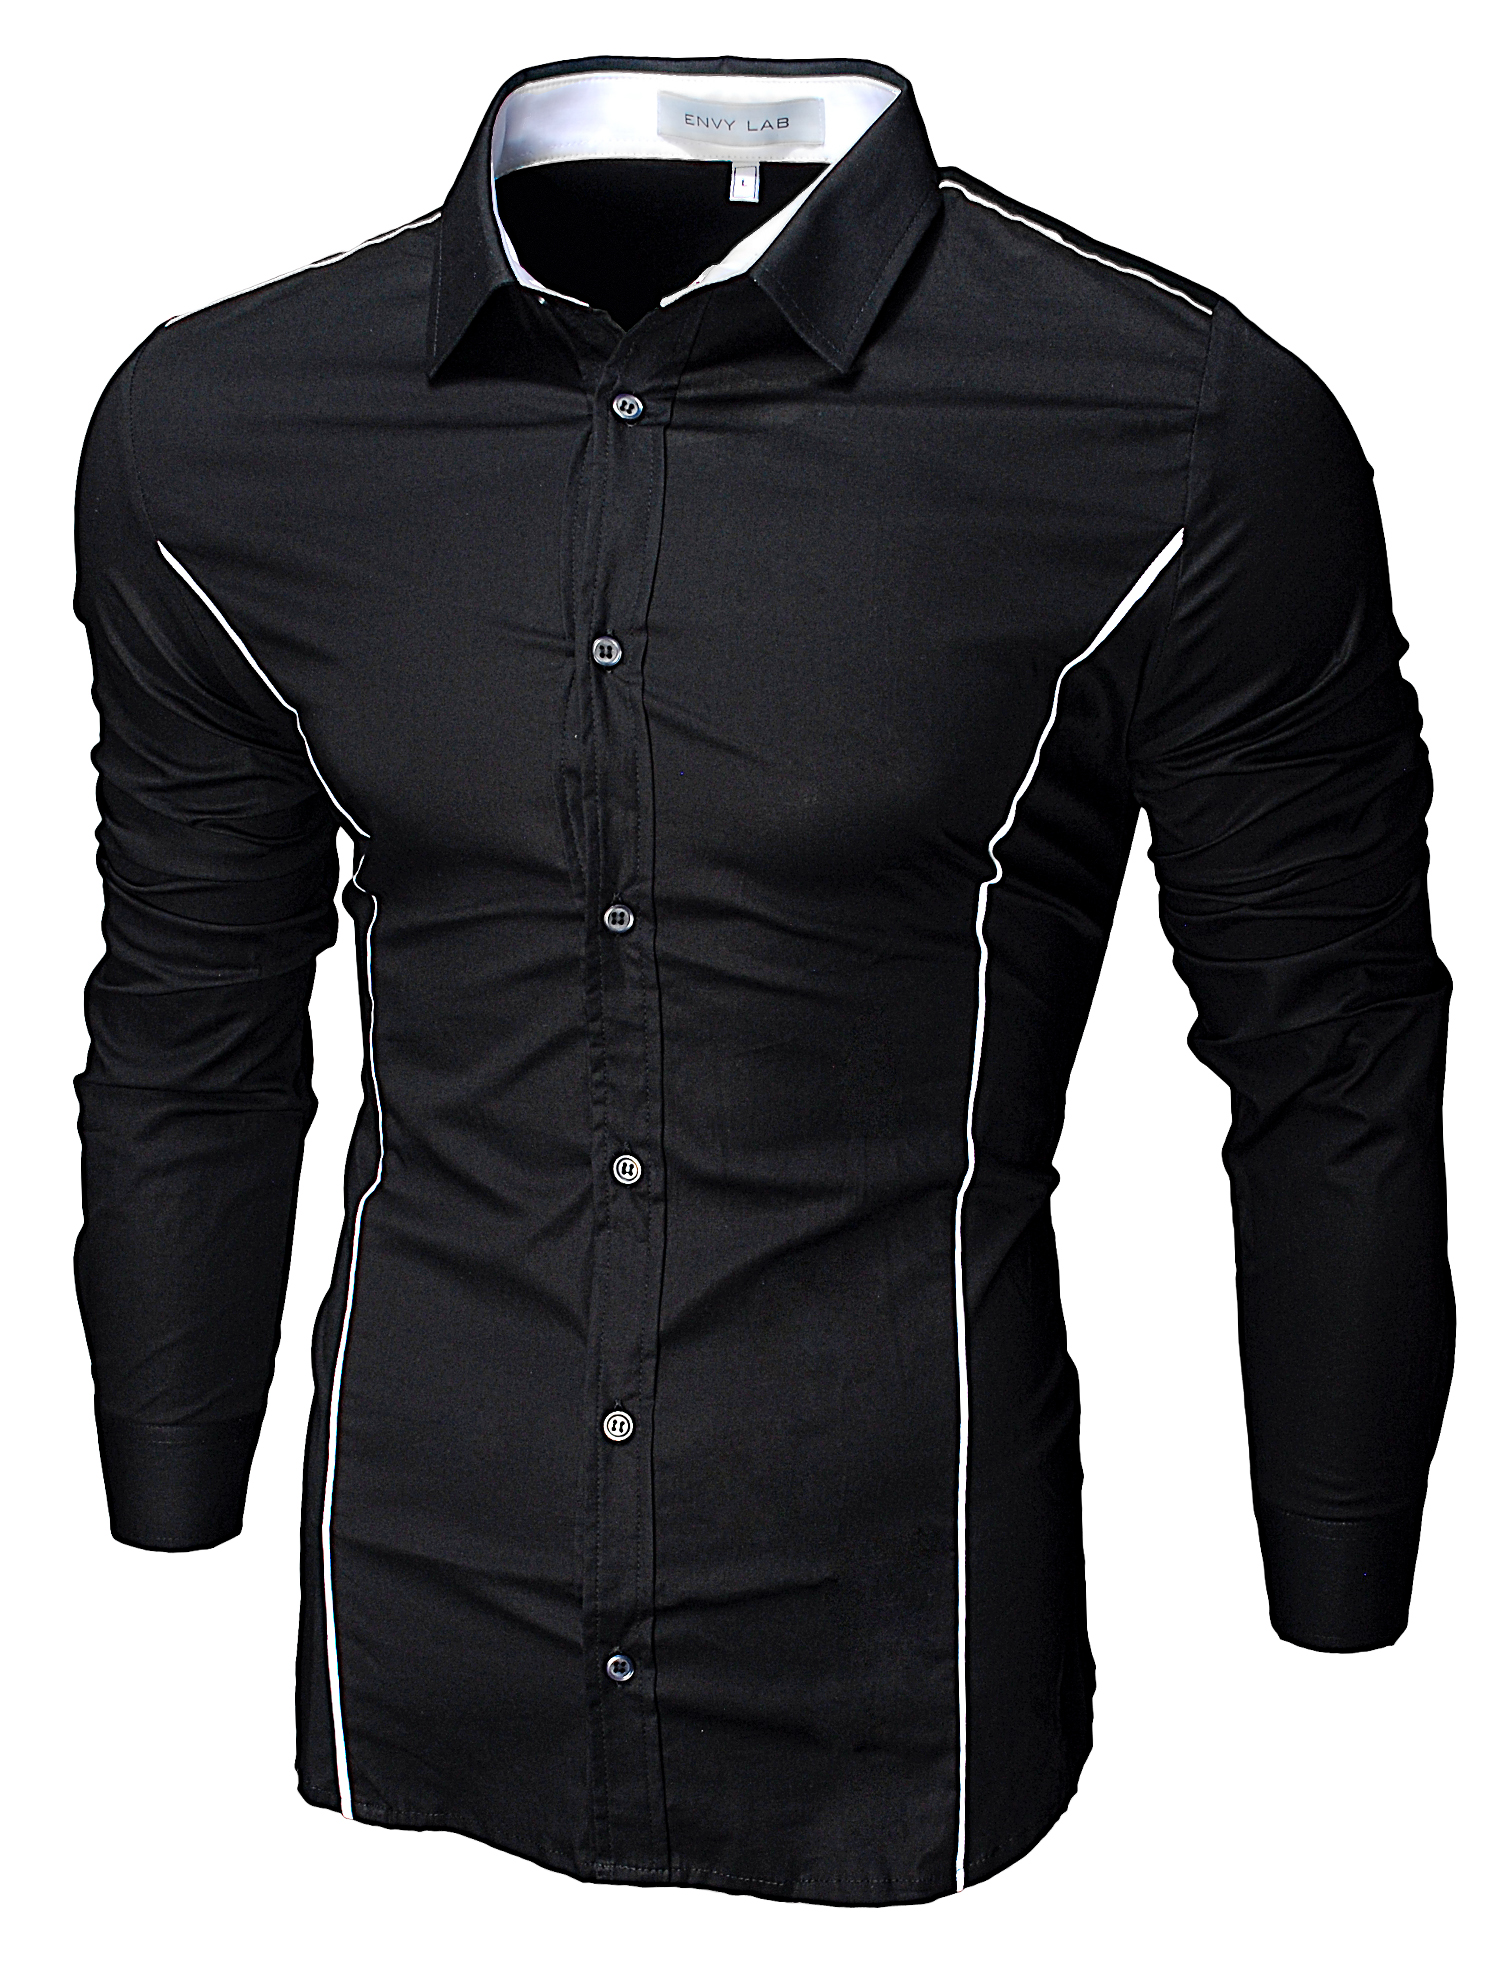 картинка товара рубашка strike black в магазине Envy LAB